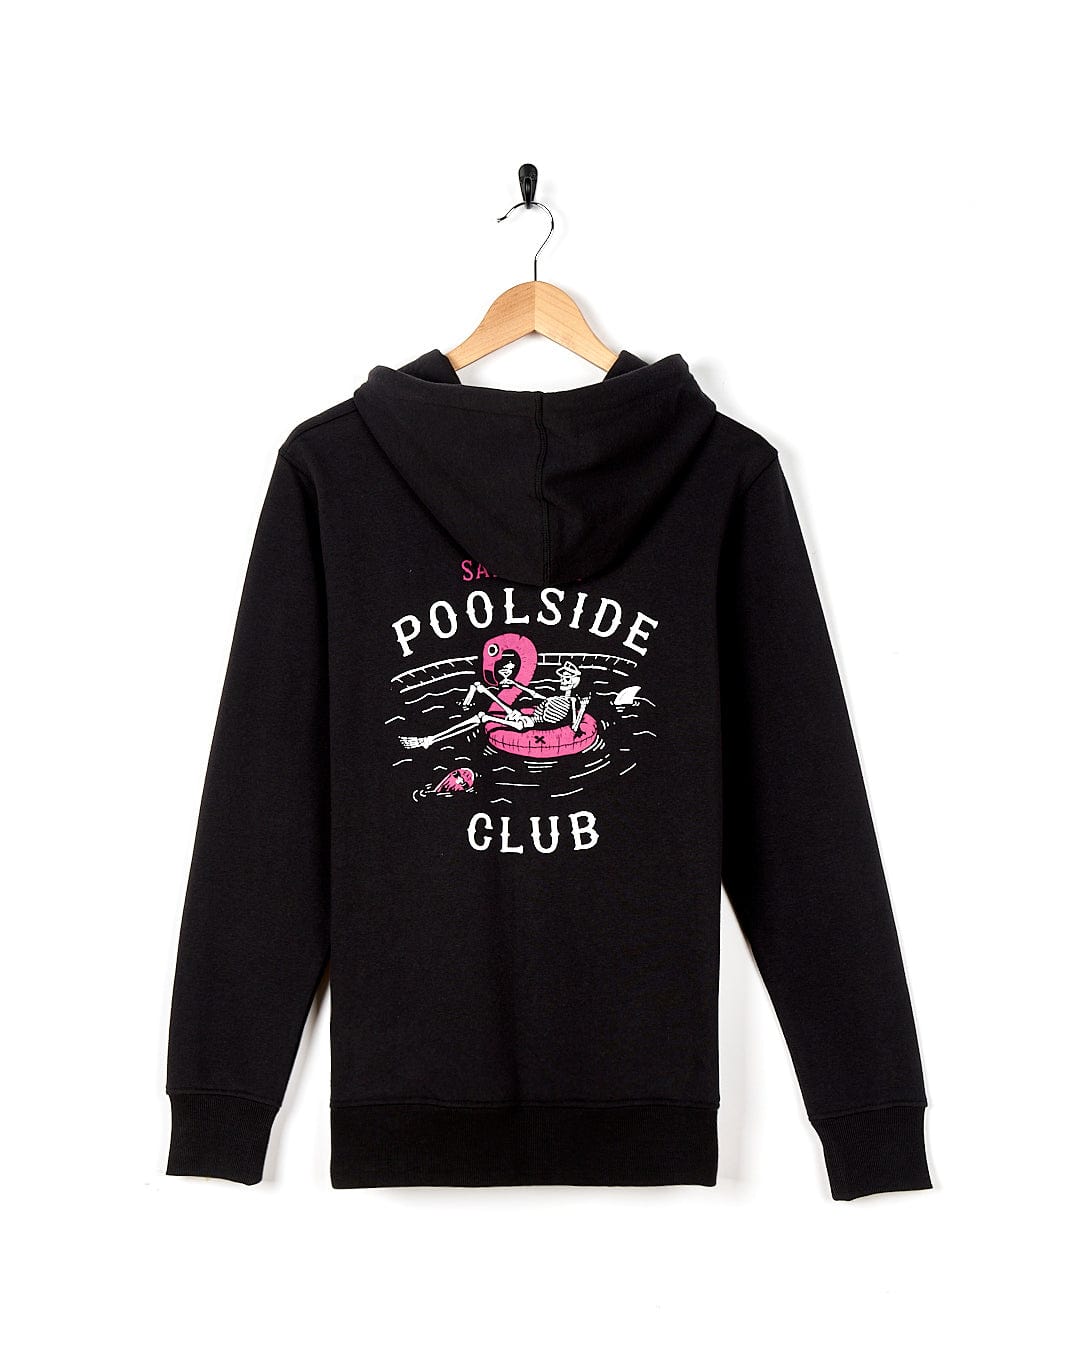 A Lee-Ann black hoodie with the word poolside club on it.